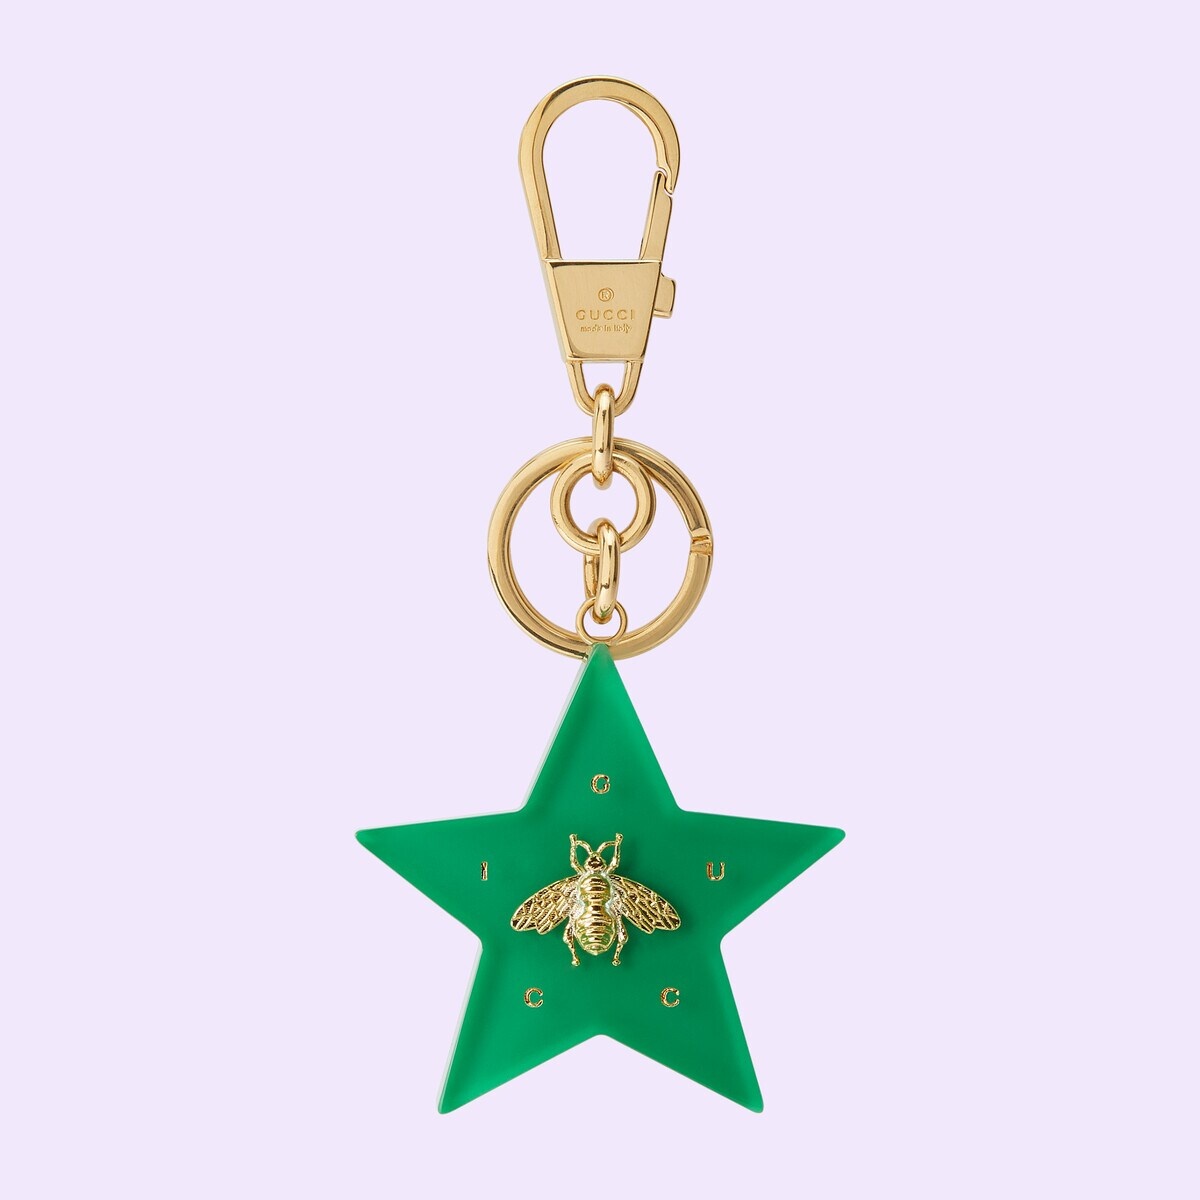 Gucci bee star-shaped keychain - 1